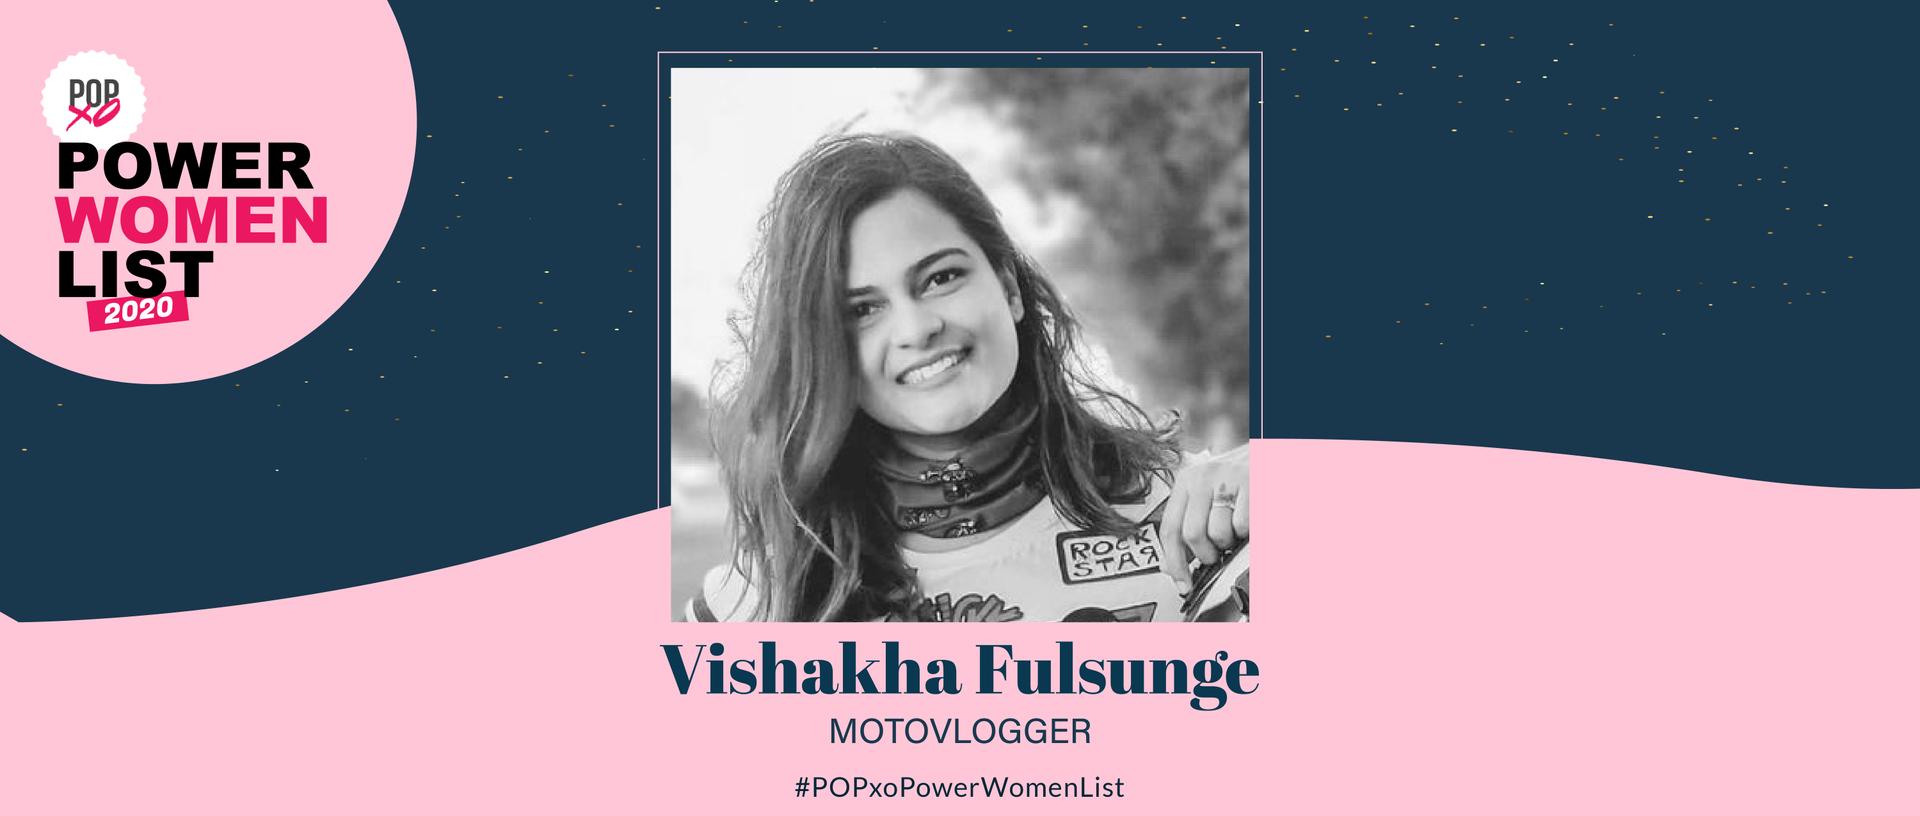 POPxo Power Women List 2020: Vishakha Fulsunge, The Rider With A Cause